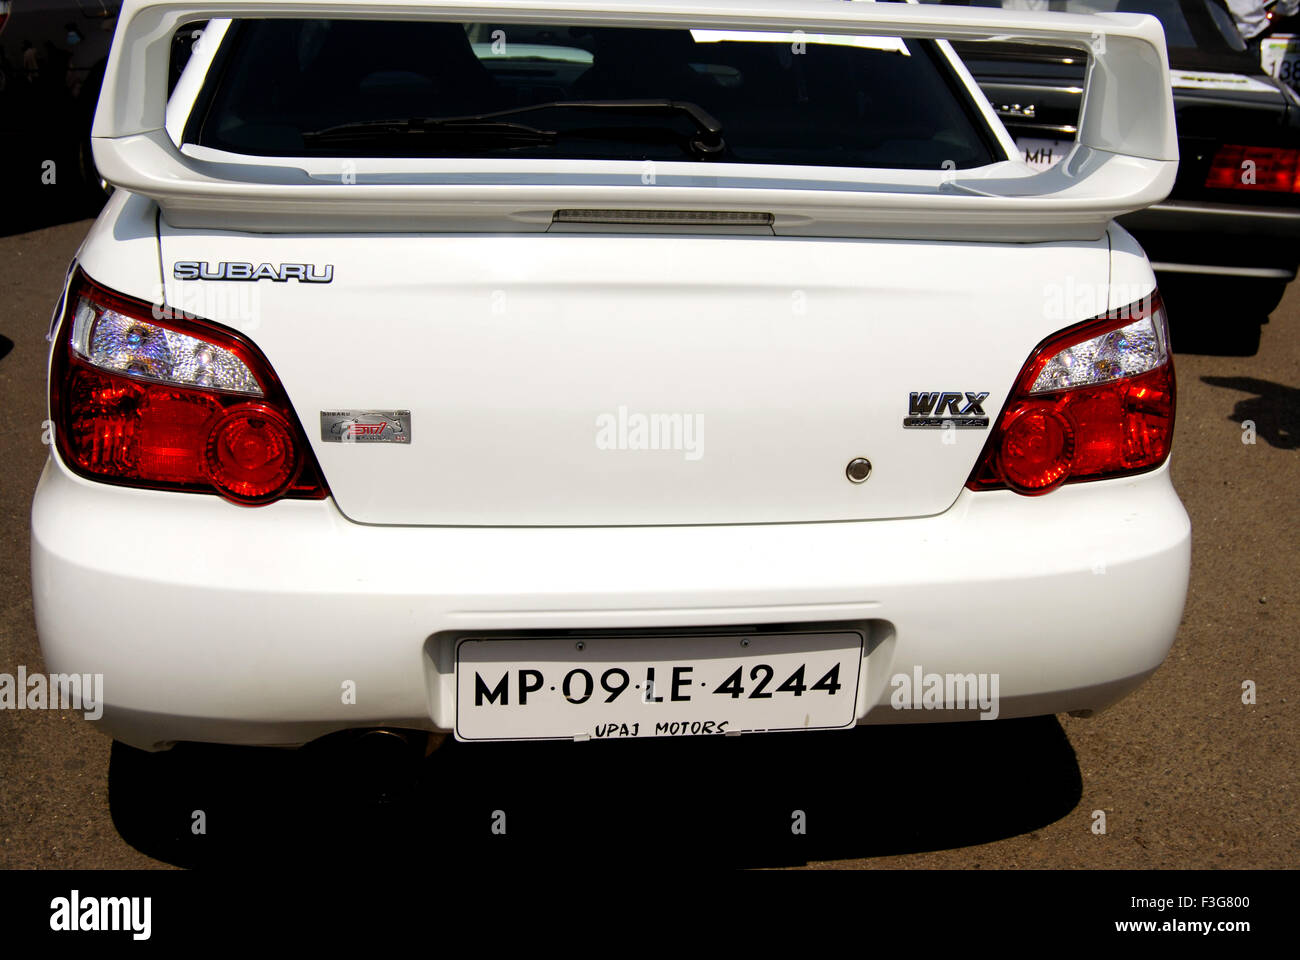 Subaru WRX Impaeza coche de lujo de color blanco ; ; Maharashtra India Foto de stock